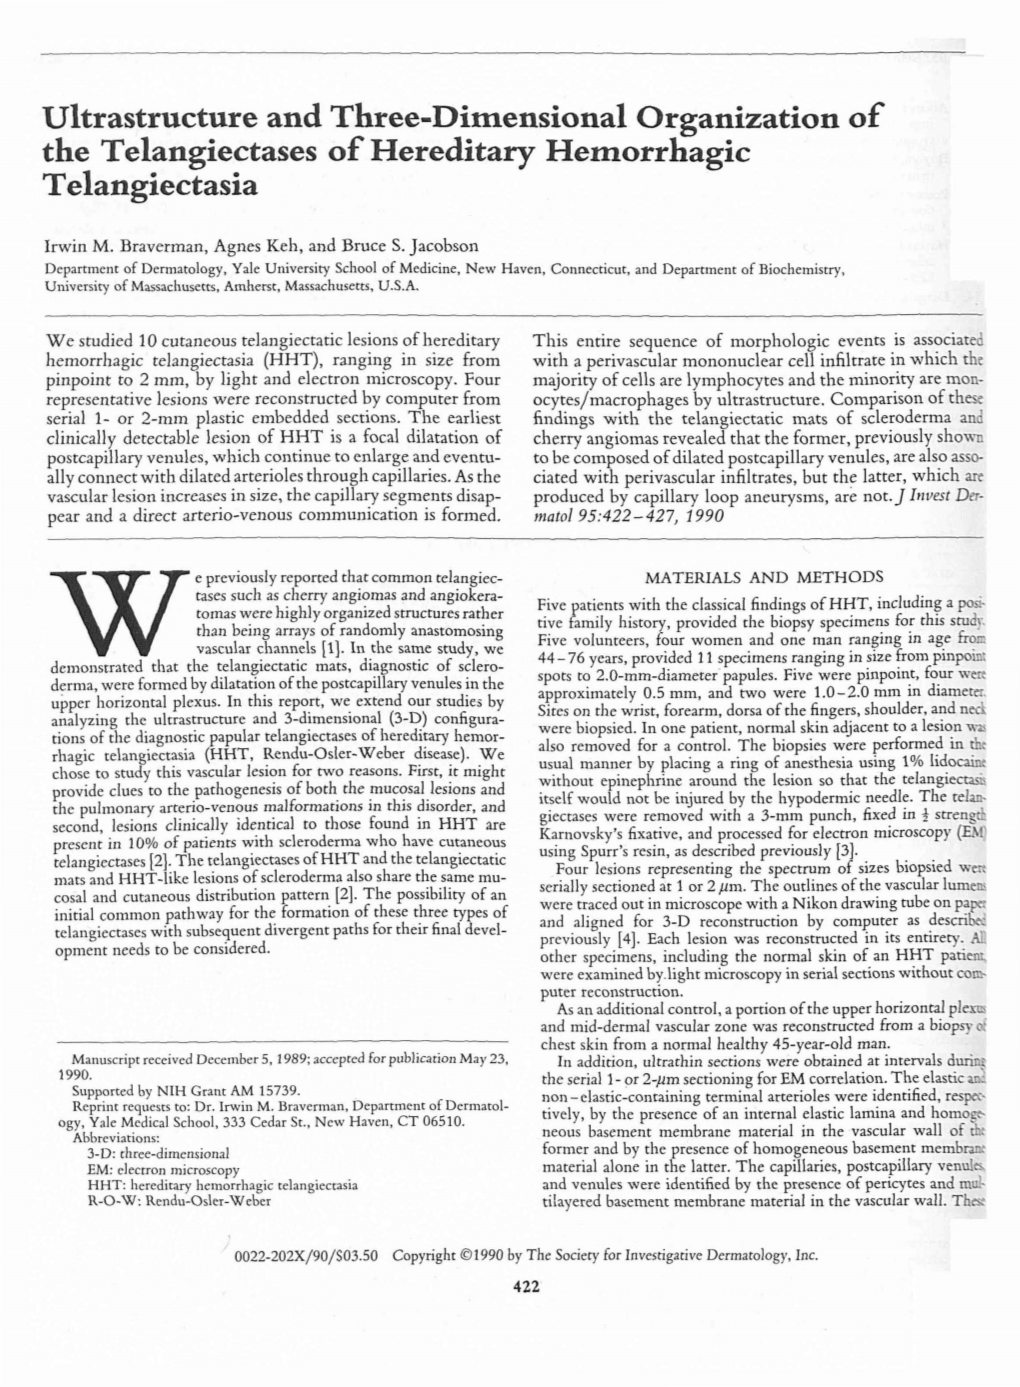 Ultrastructure and Three-Dimensional Organization of the Telangiectases of Hereditary Hemorrhagic Telangiectasia